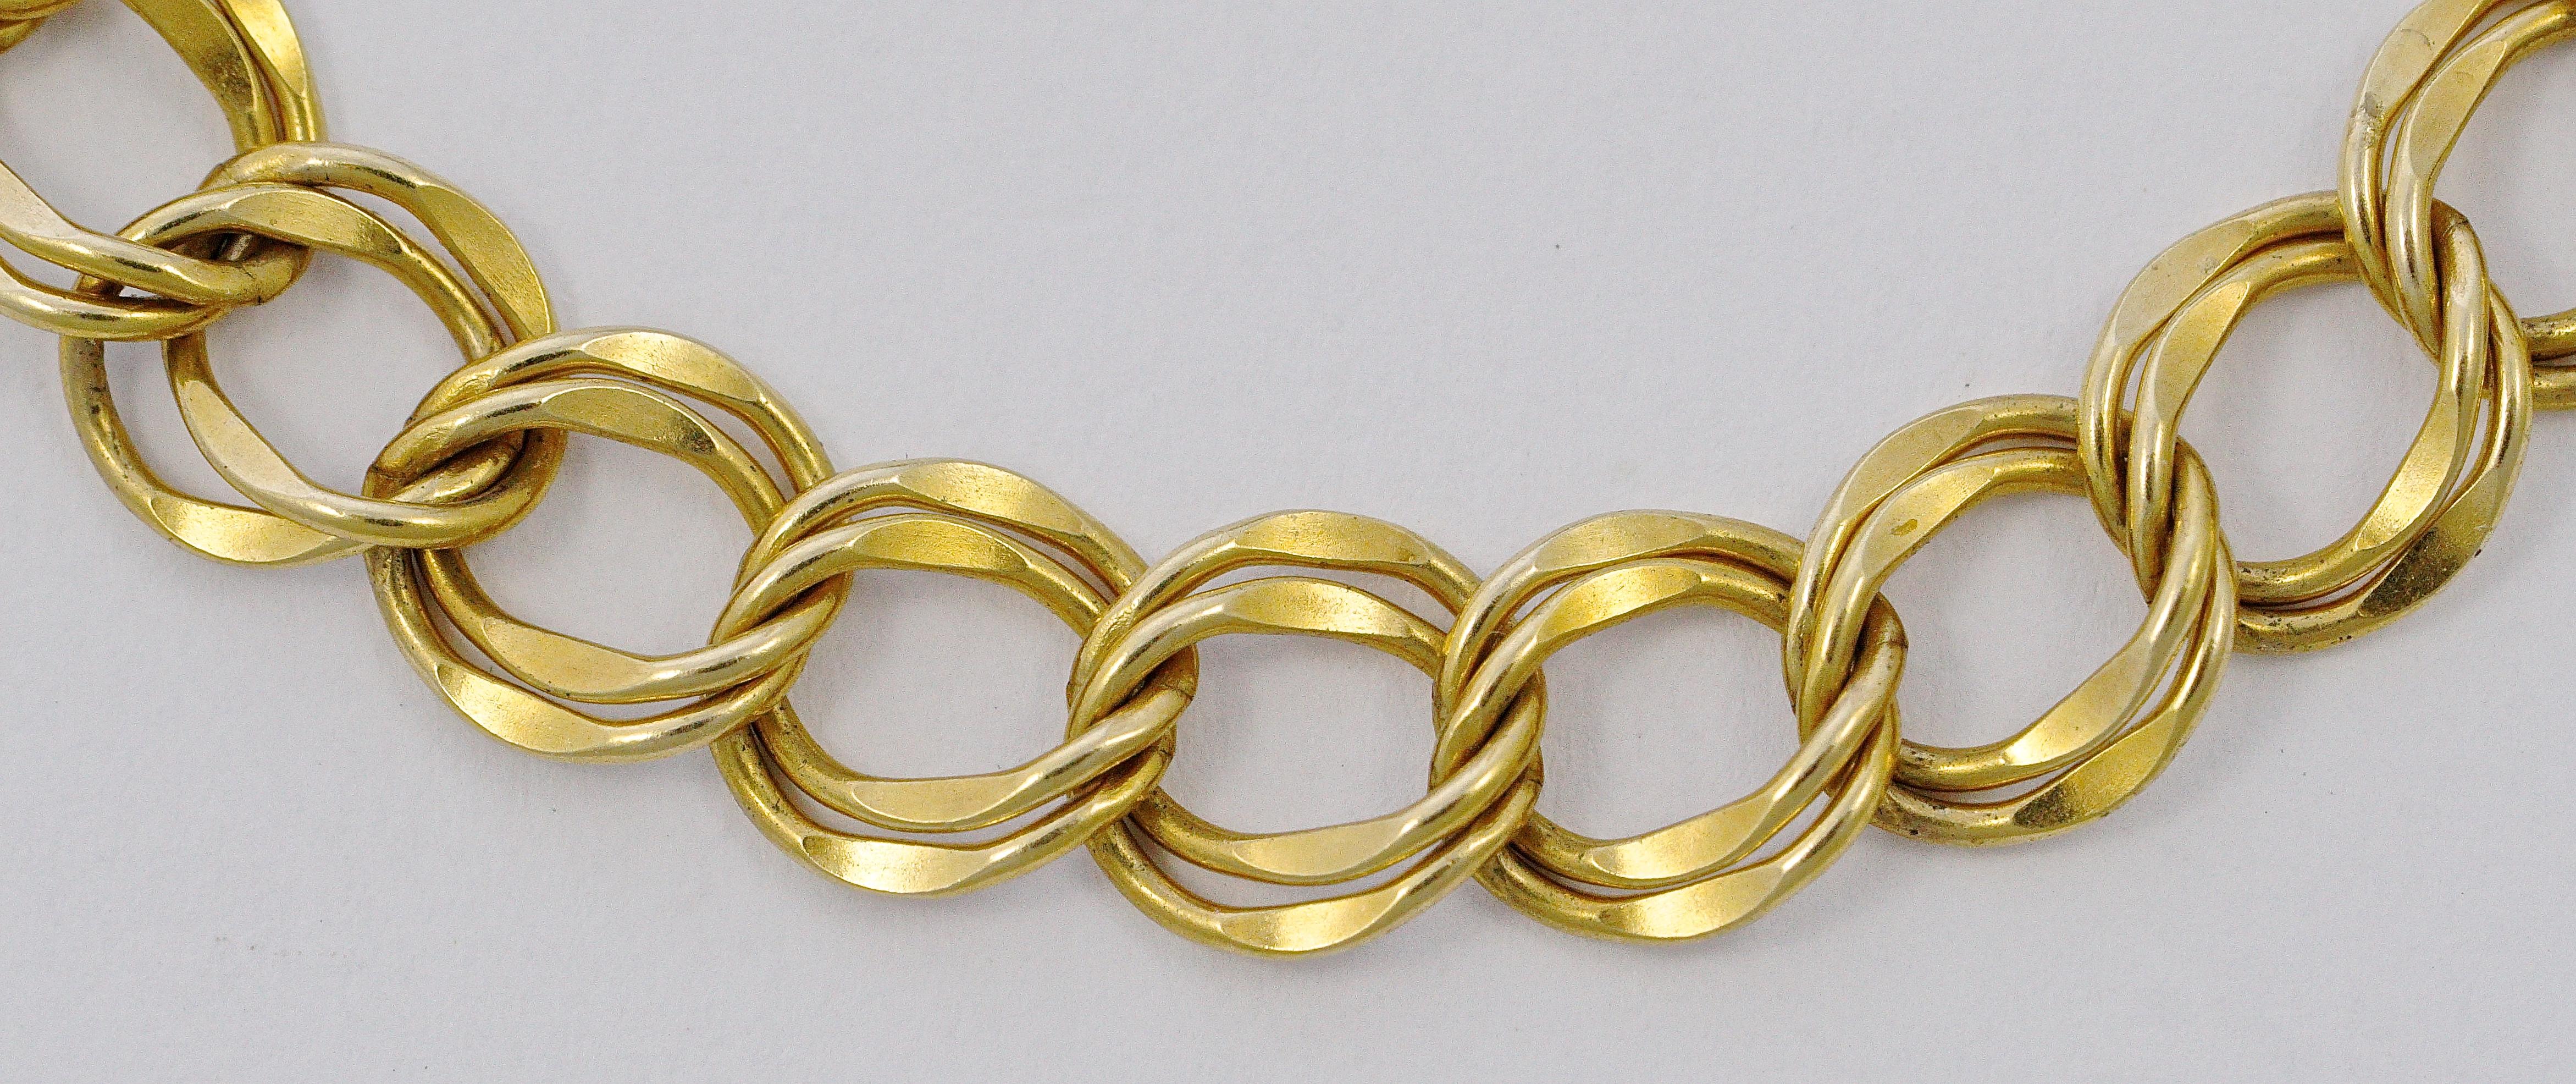 12k gold chain